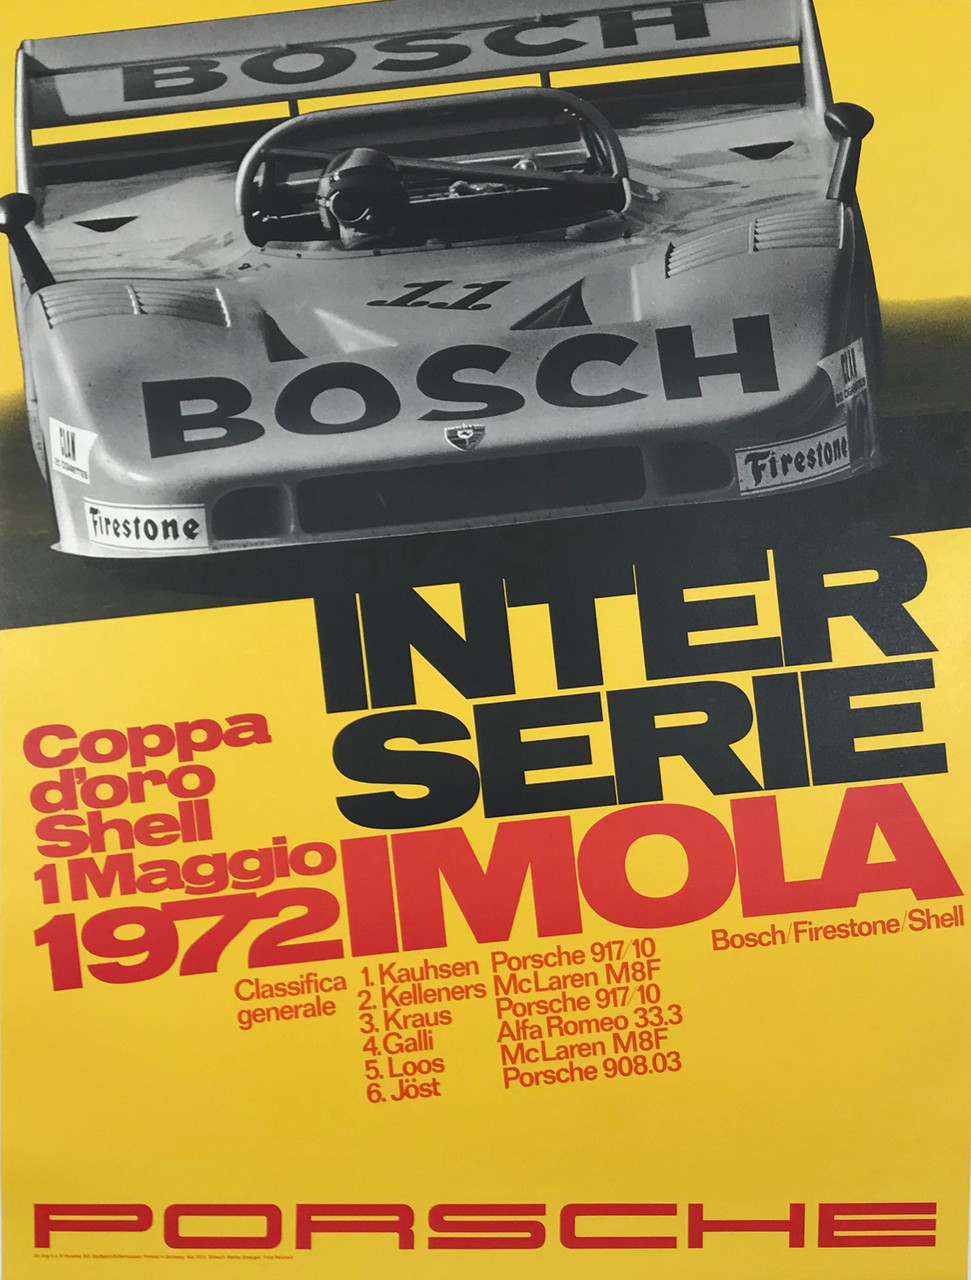 Porsche Imola Interserie Photo by Reichert Original 1972 Vintage German Strenger Printing Car Racing Promotional Advertisement Poster Linen Backed. 